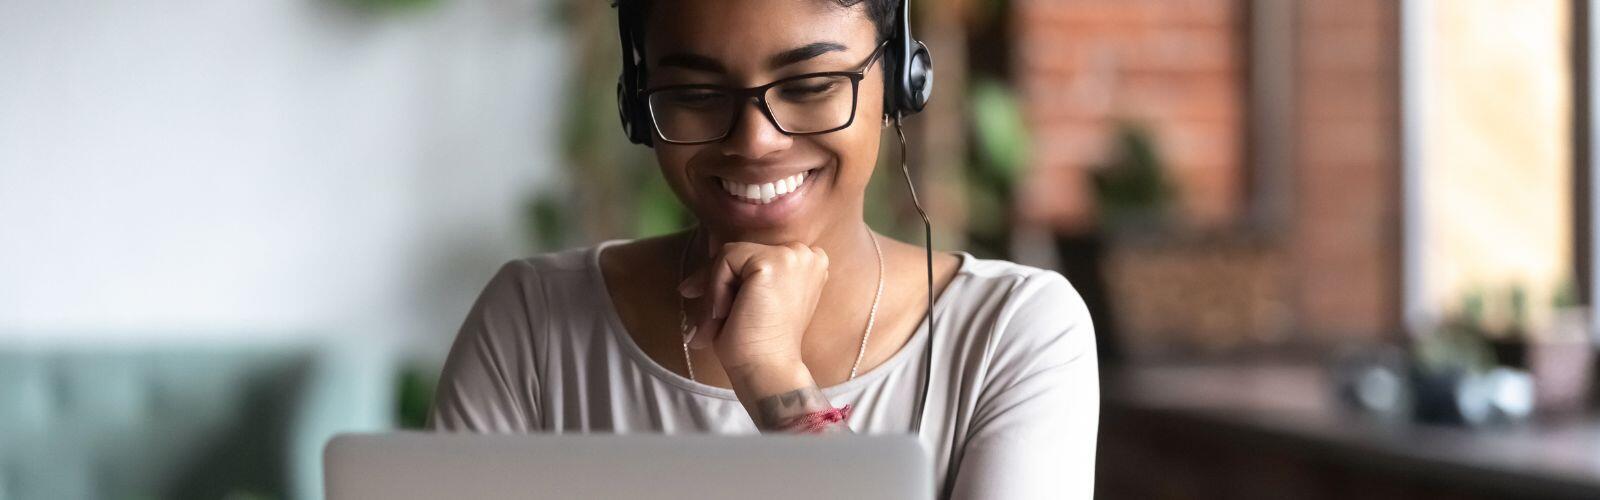 female student sitting at laptop wearing headphones